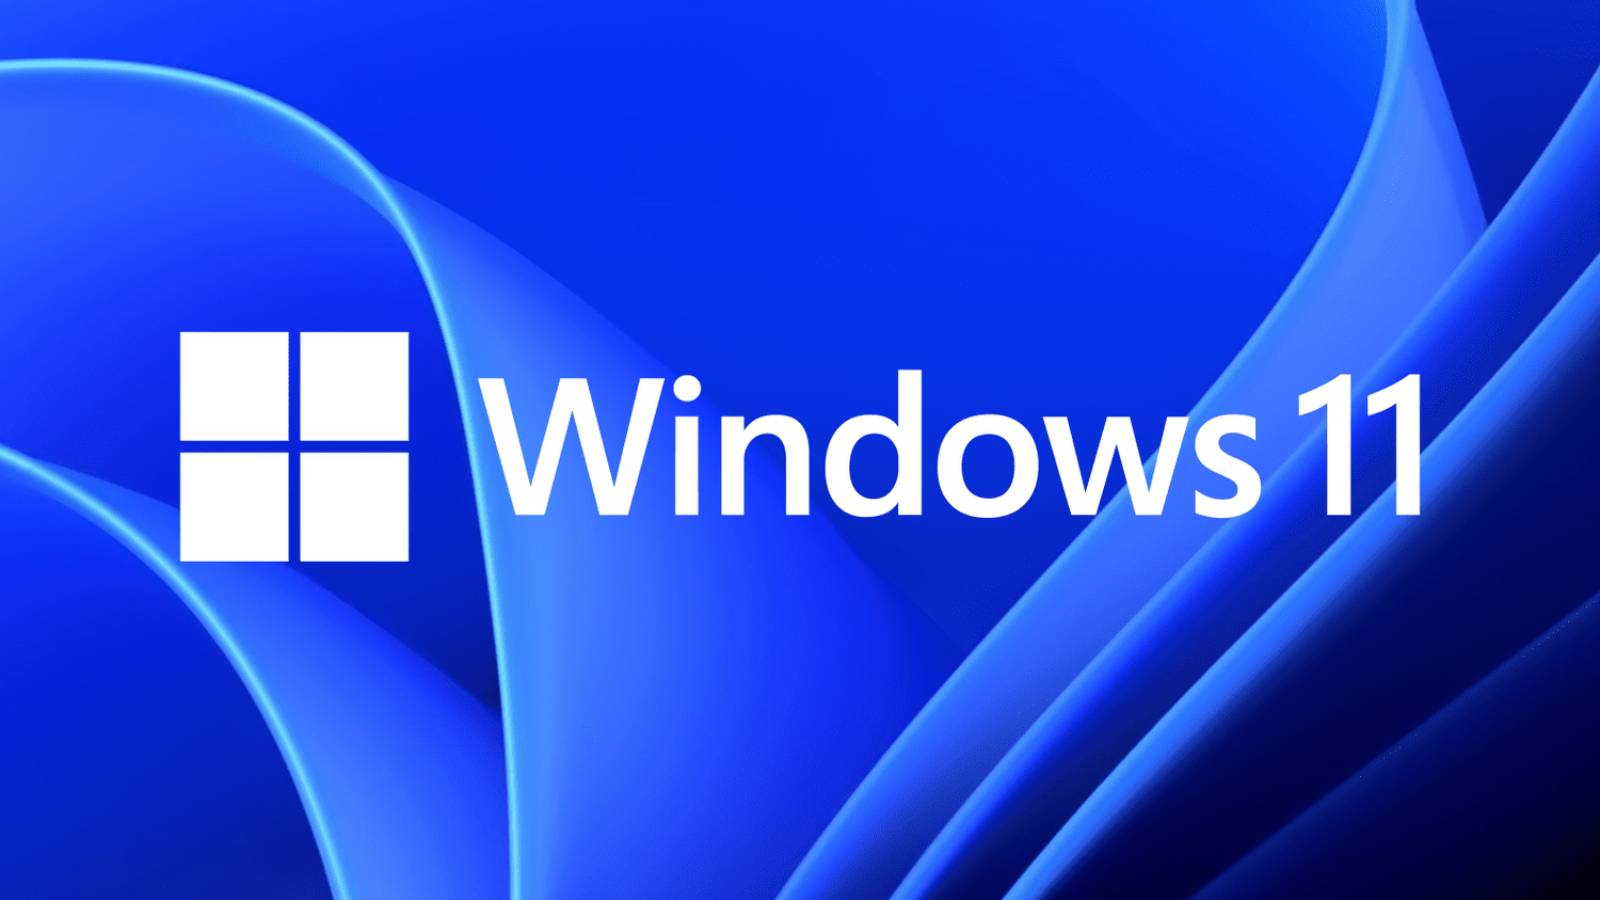 Microsoft Important CHANGES Windows 11 Europe Compulsory European Commission